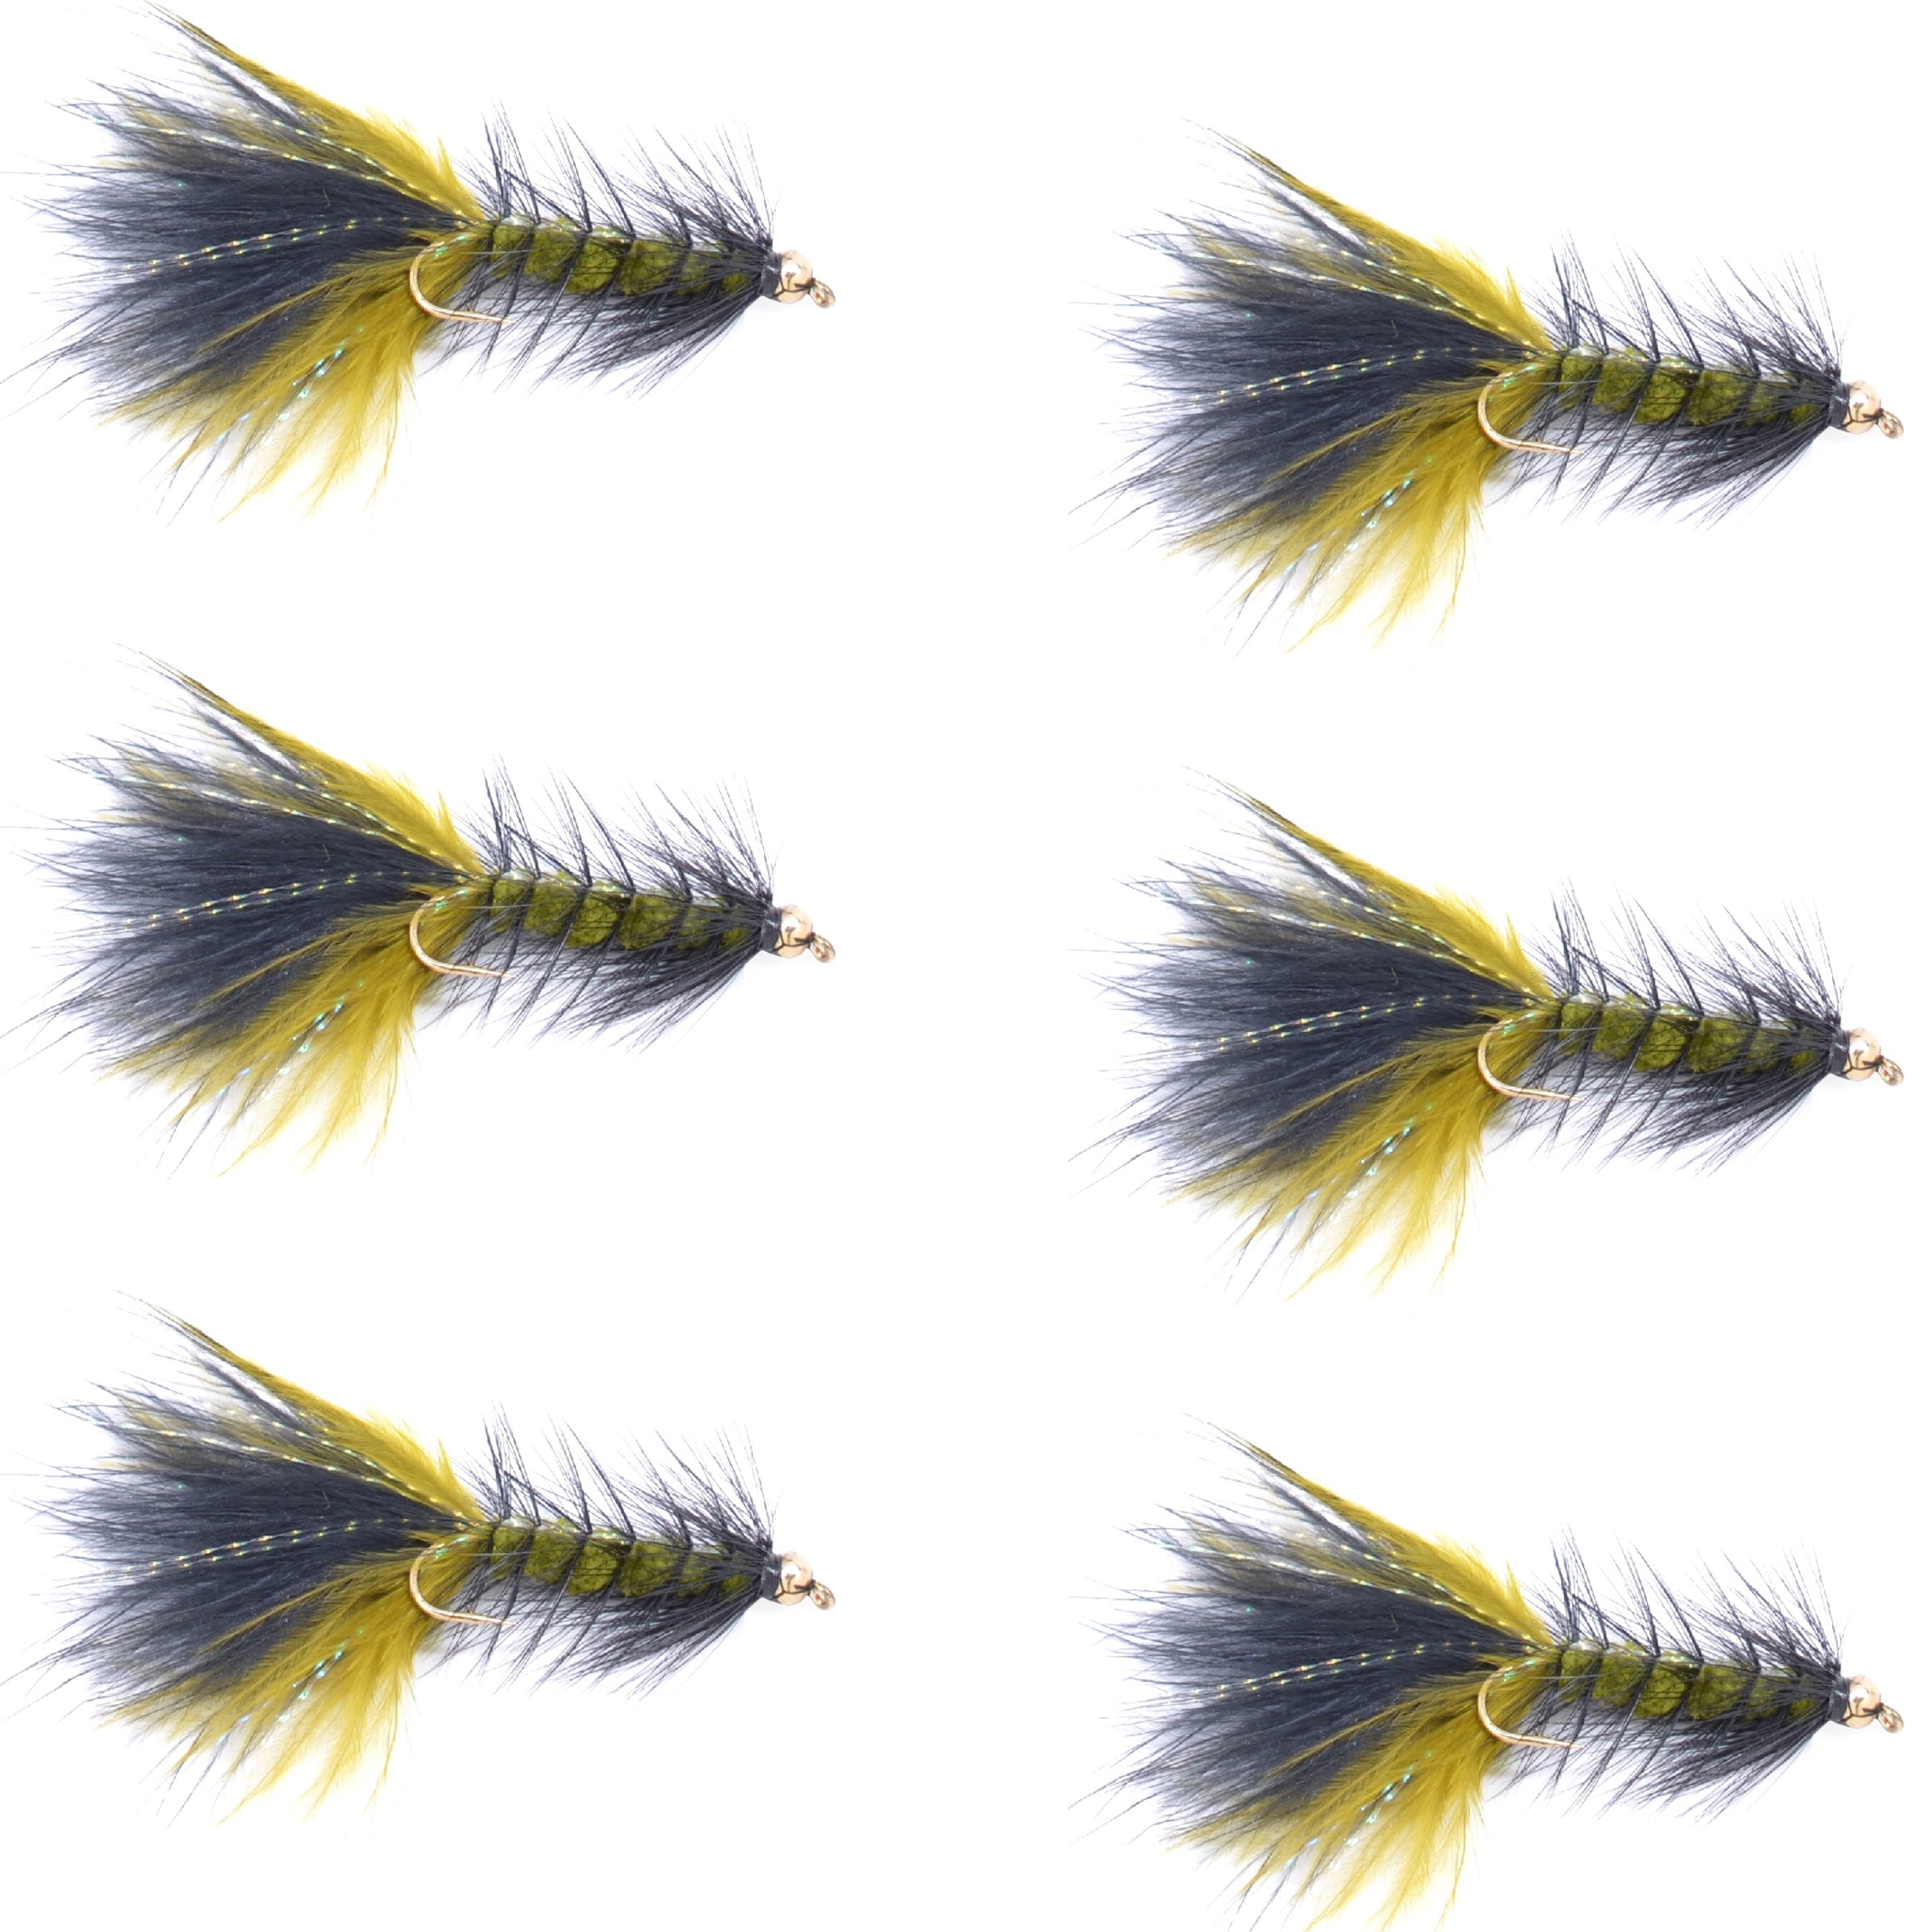 Moscas Streamer clásicas con cabeza de cuentas de cristal, color negro oliva, juego de 6 moscas para pesca con mosca de trucha, tamaño de anzuelo 8